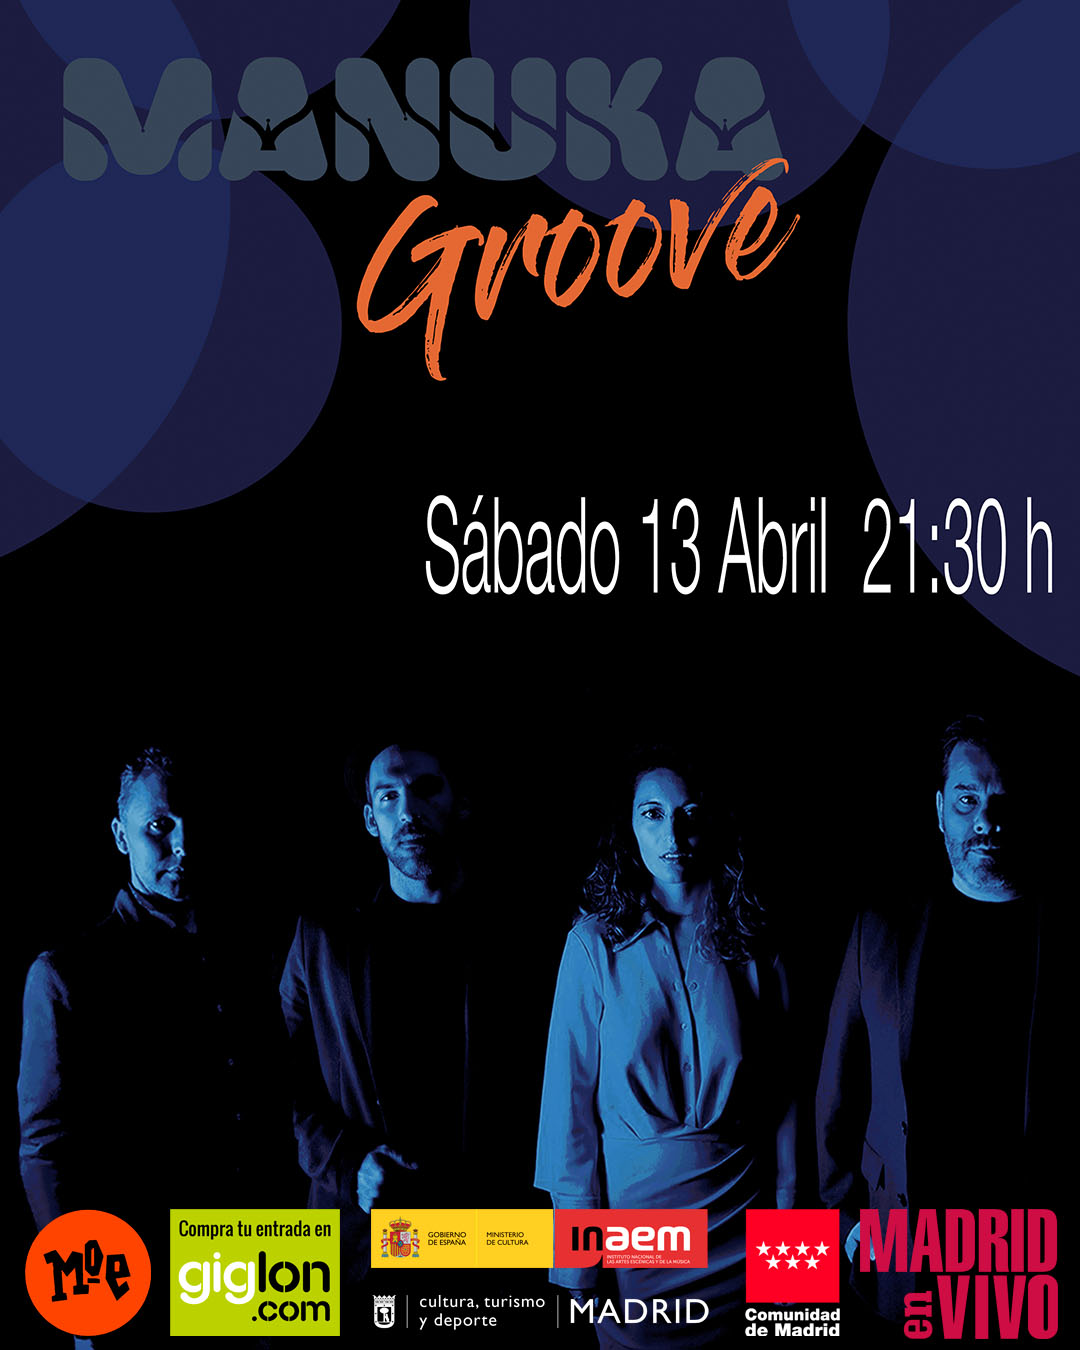 MADRID EN VIVO #81: Néstor Pardo, Manuka Groove, Yandy Martínez